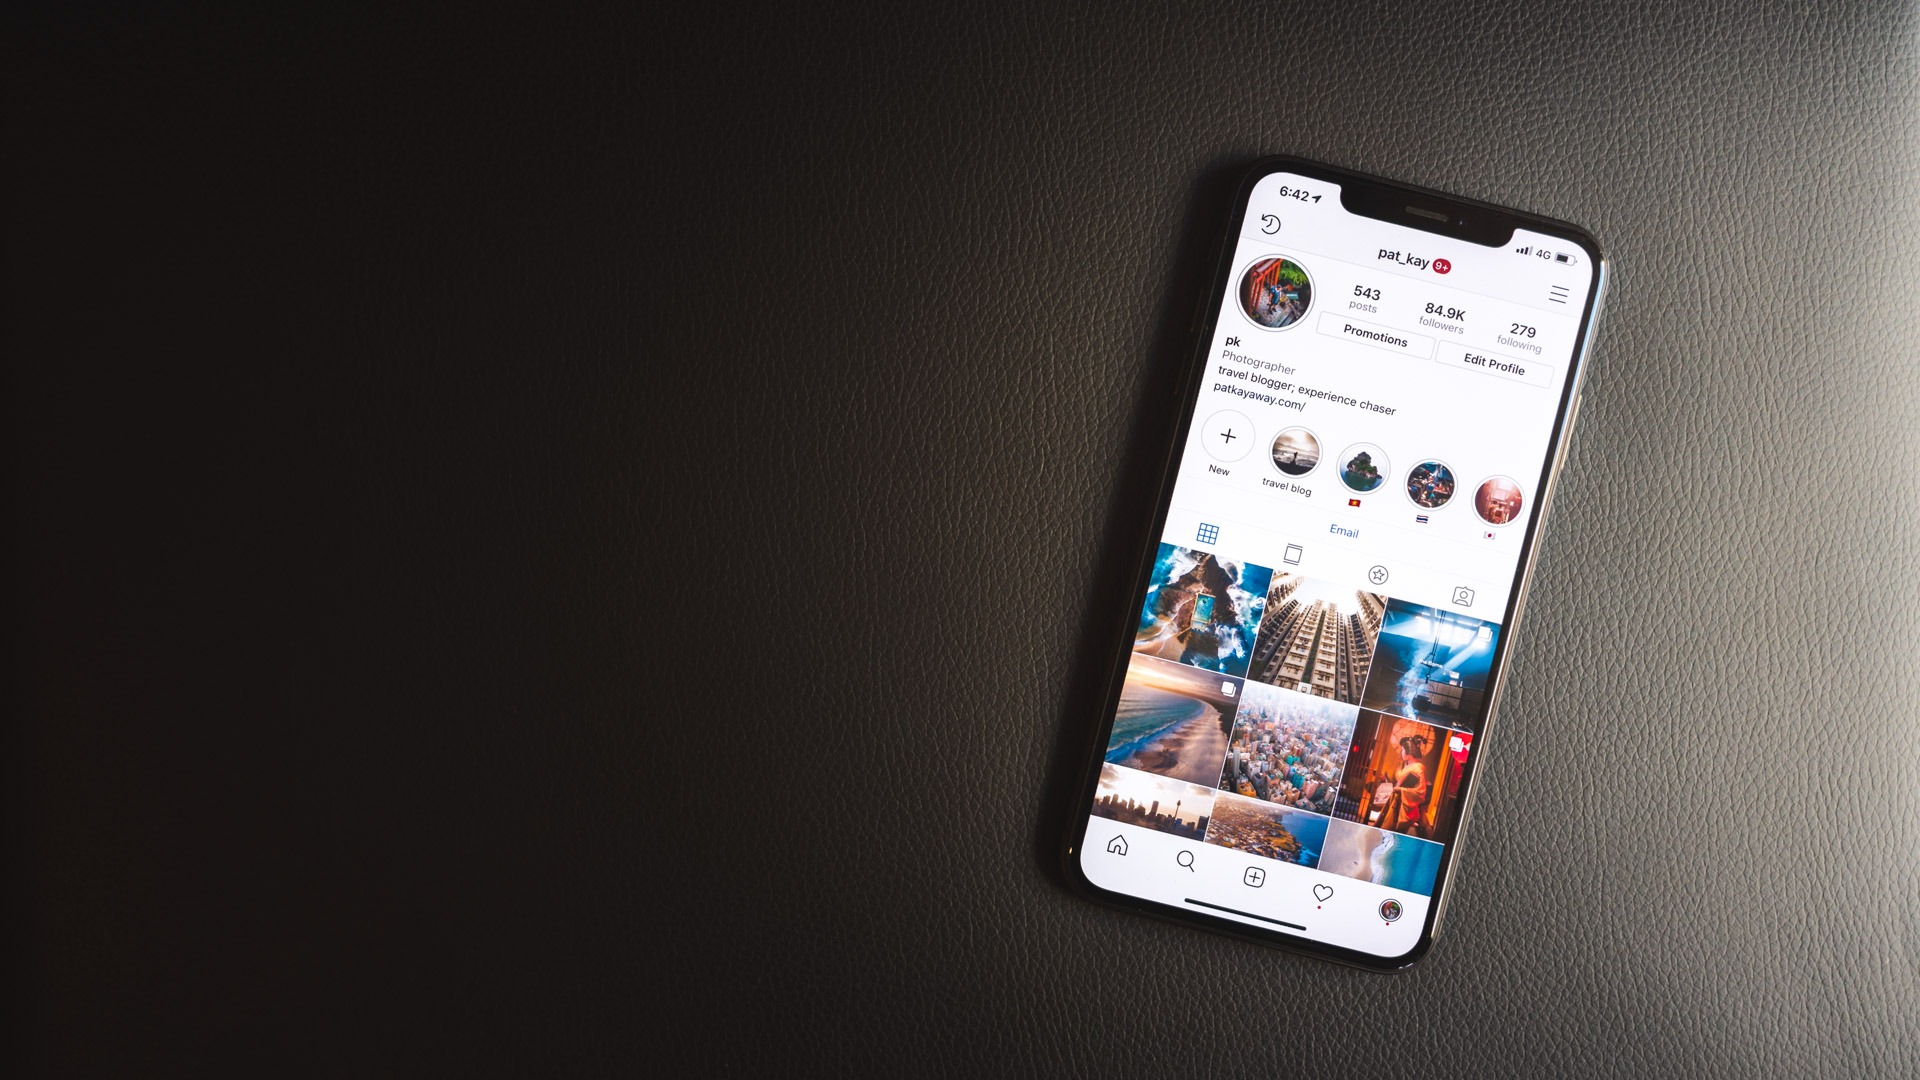 Instagram On Phone 2019 - HD Wallpaper 